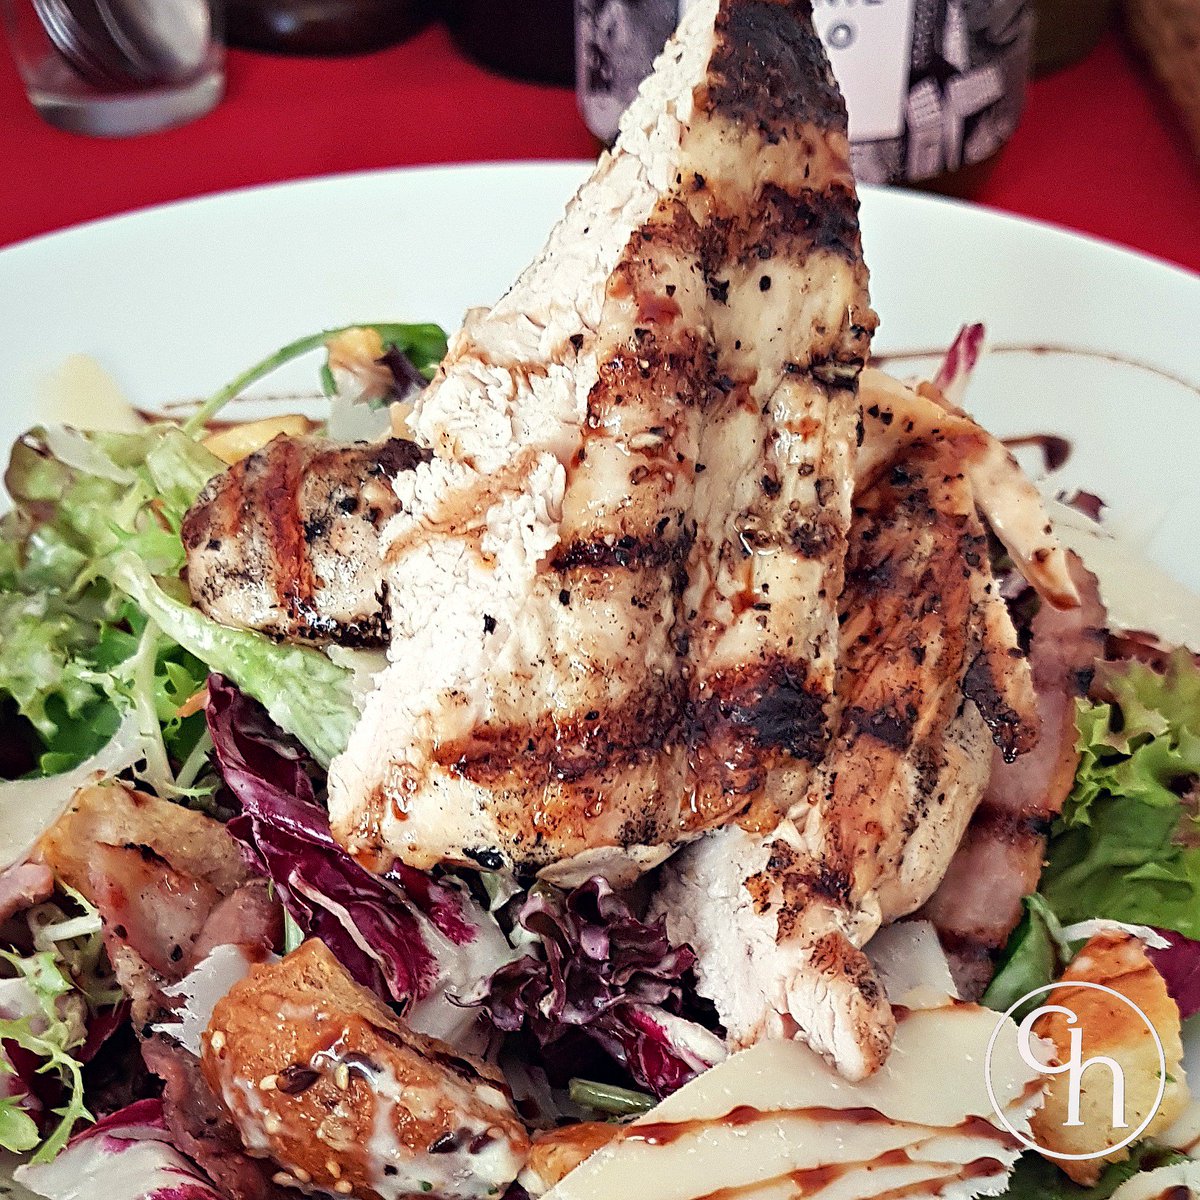 Chicken caesar salad from the lunch menu 🍽😋

#chicken #chickencaesar #caesarsalad